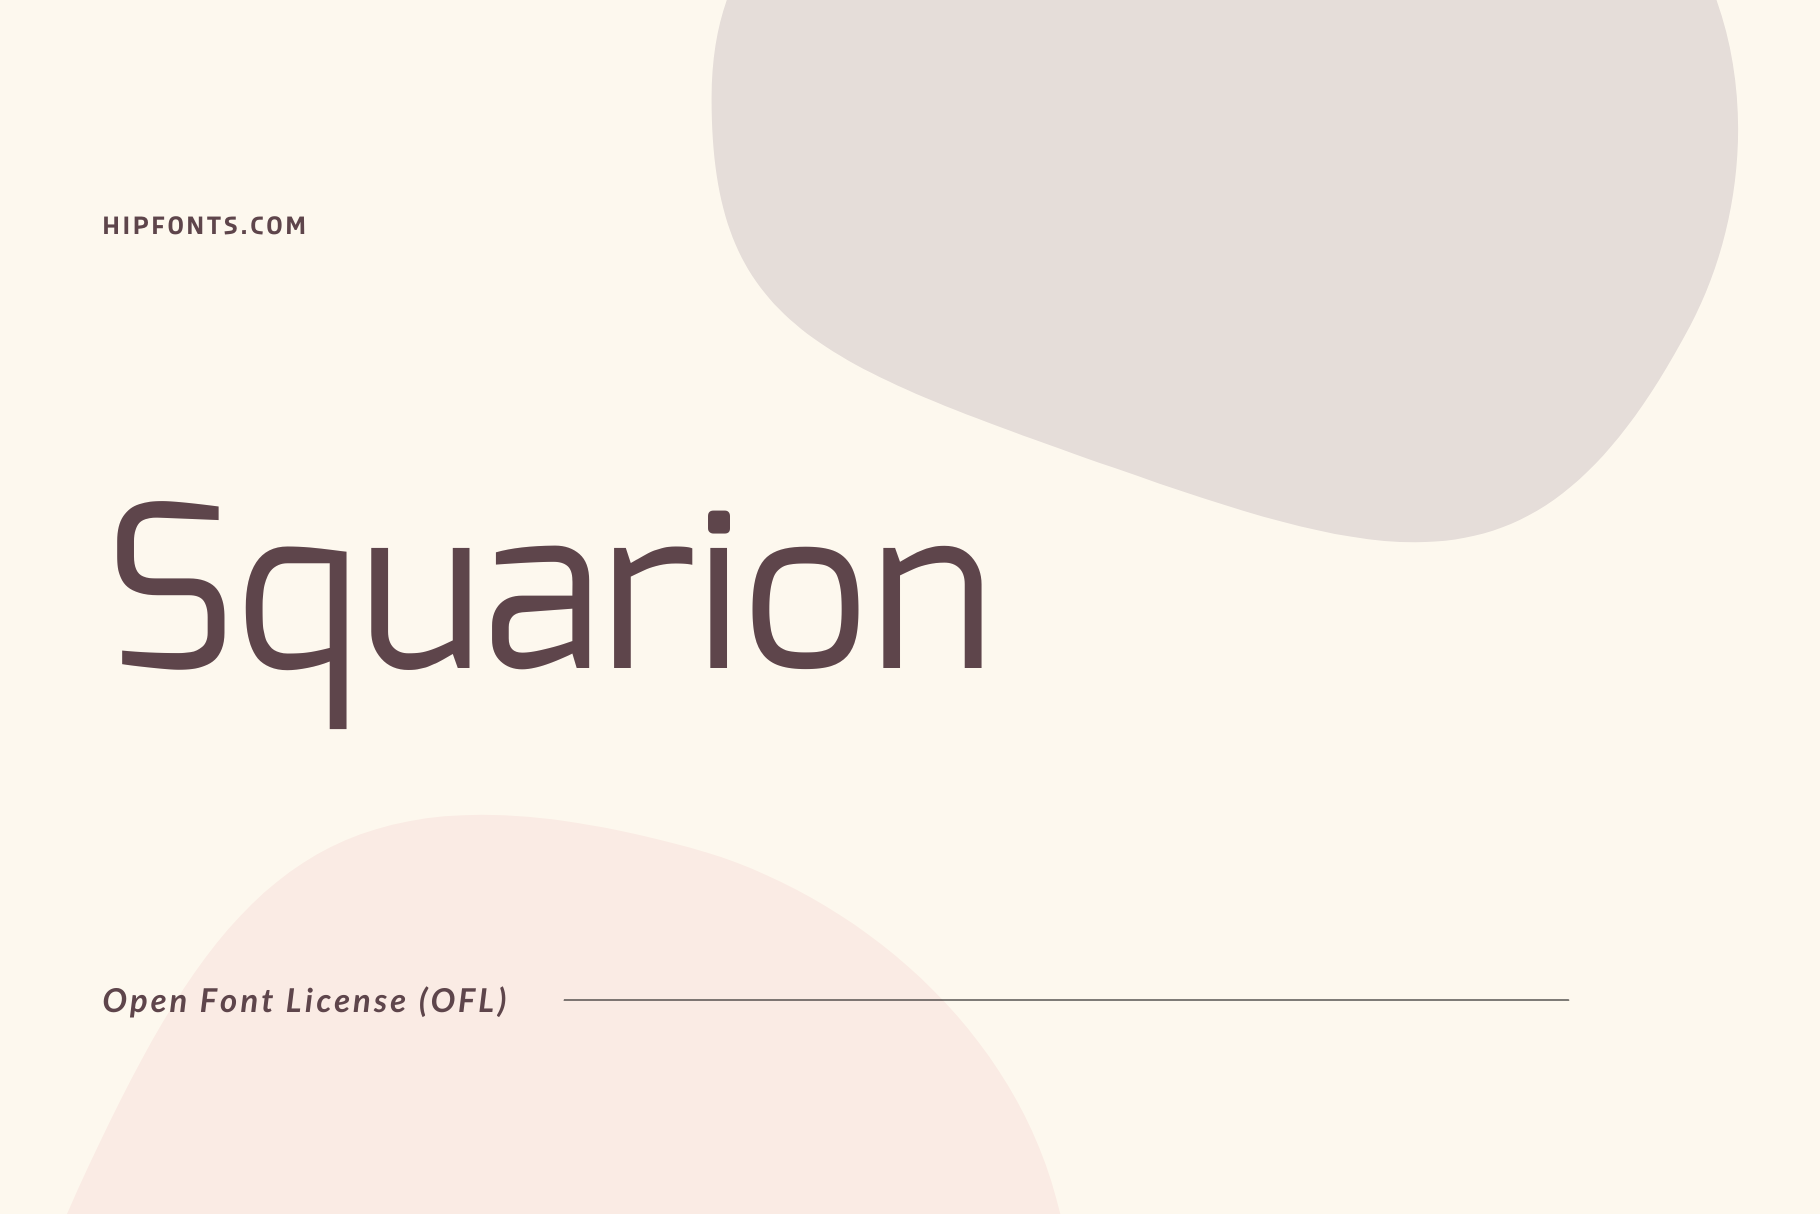 Squarion free font